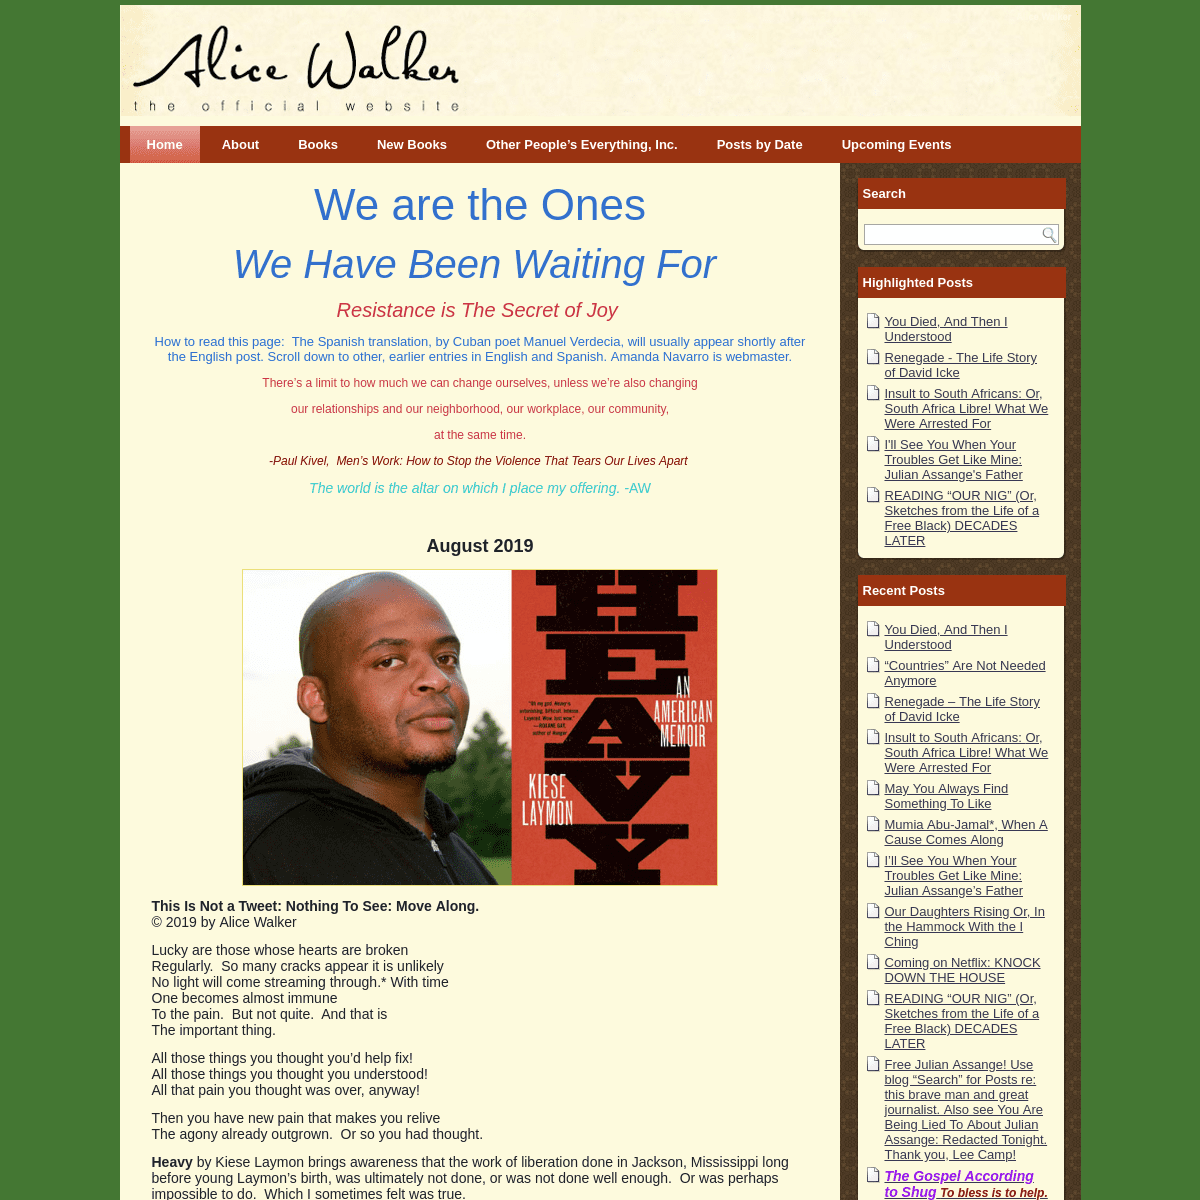 Alice Walker | The Official Website for the American Novelist & Poet